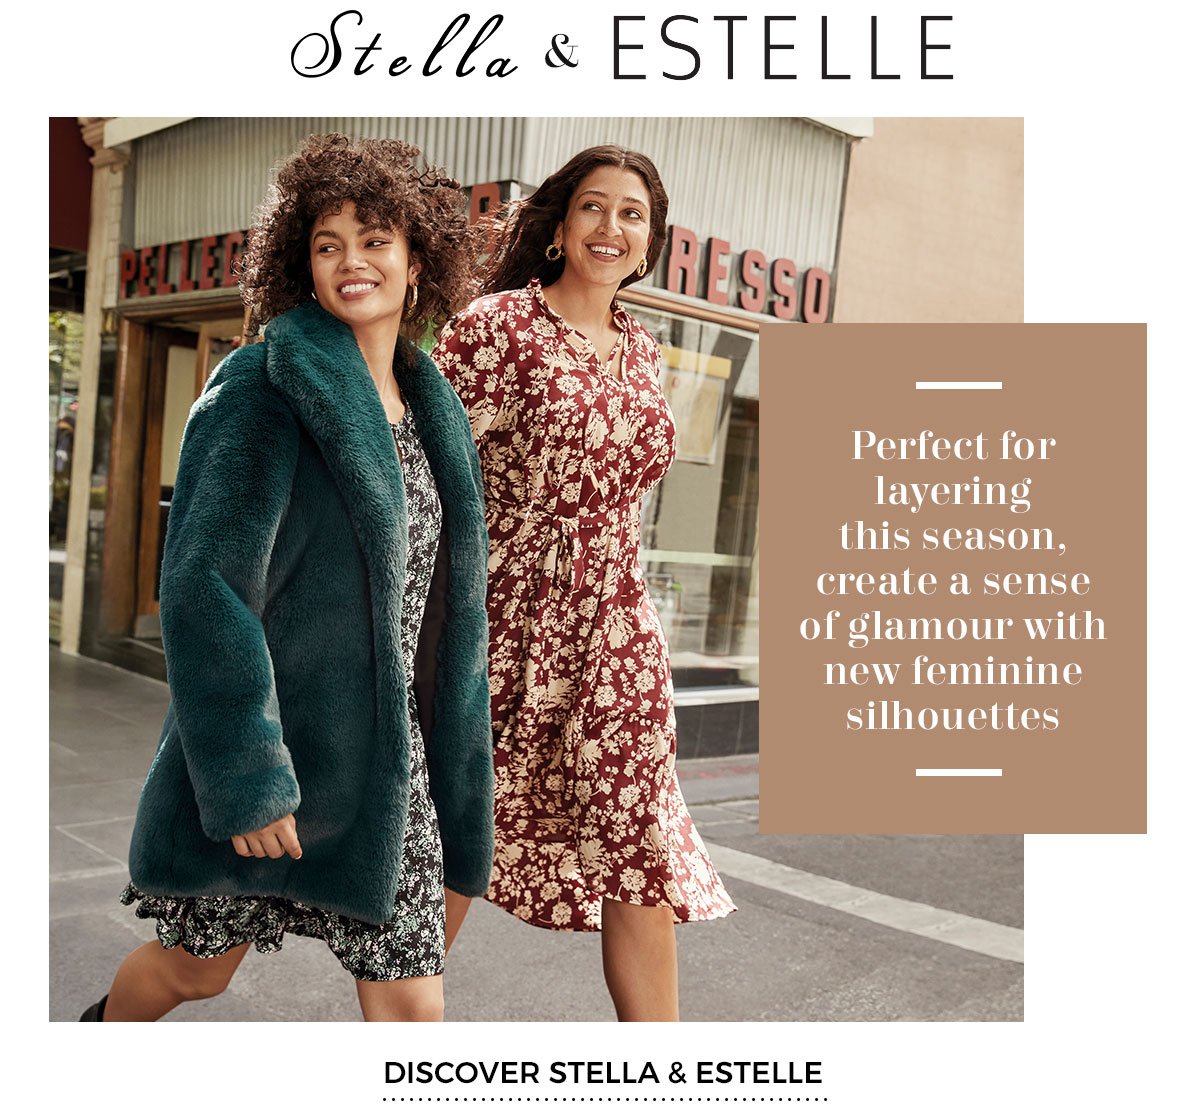 Stella & Estelle